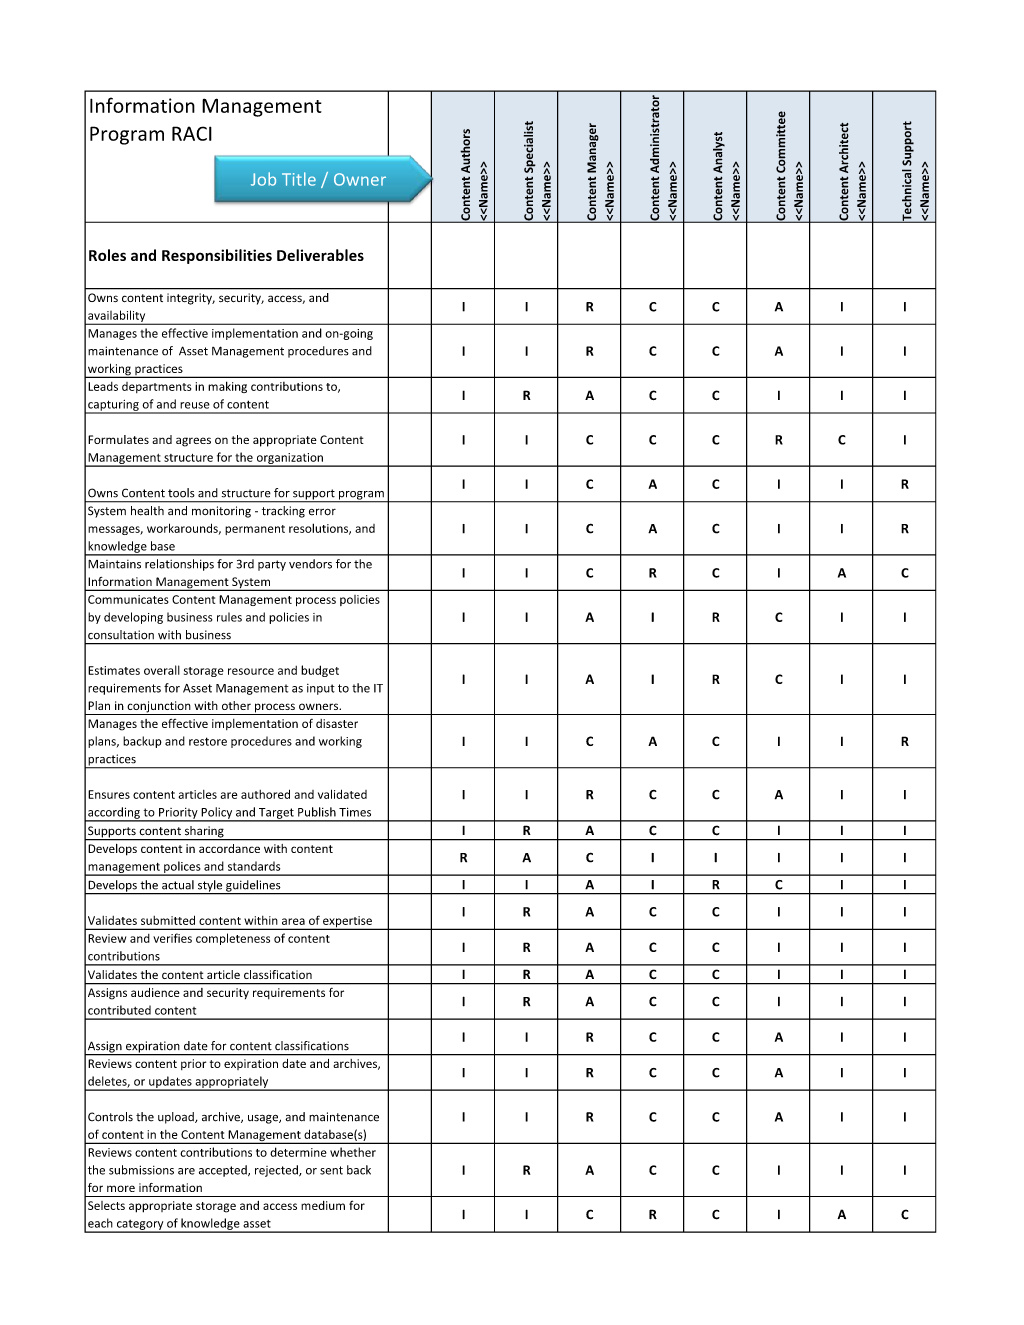 Sample RACI Matrix Worksheet - 3 Quick Steps